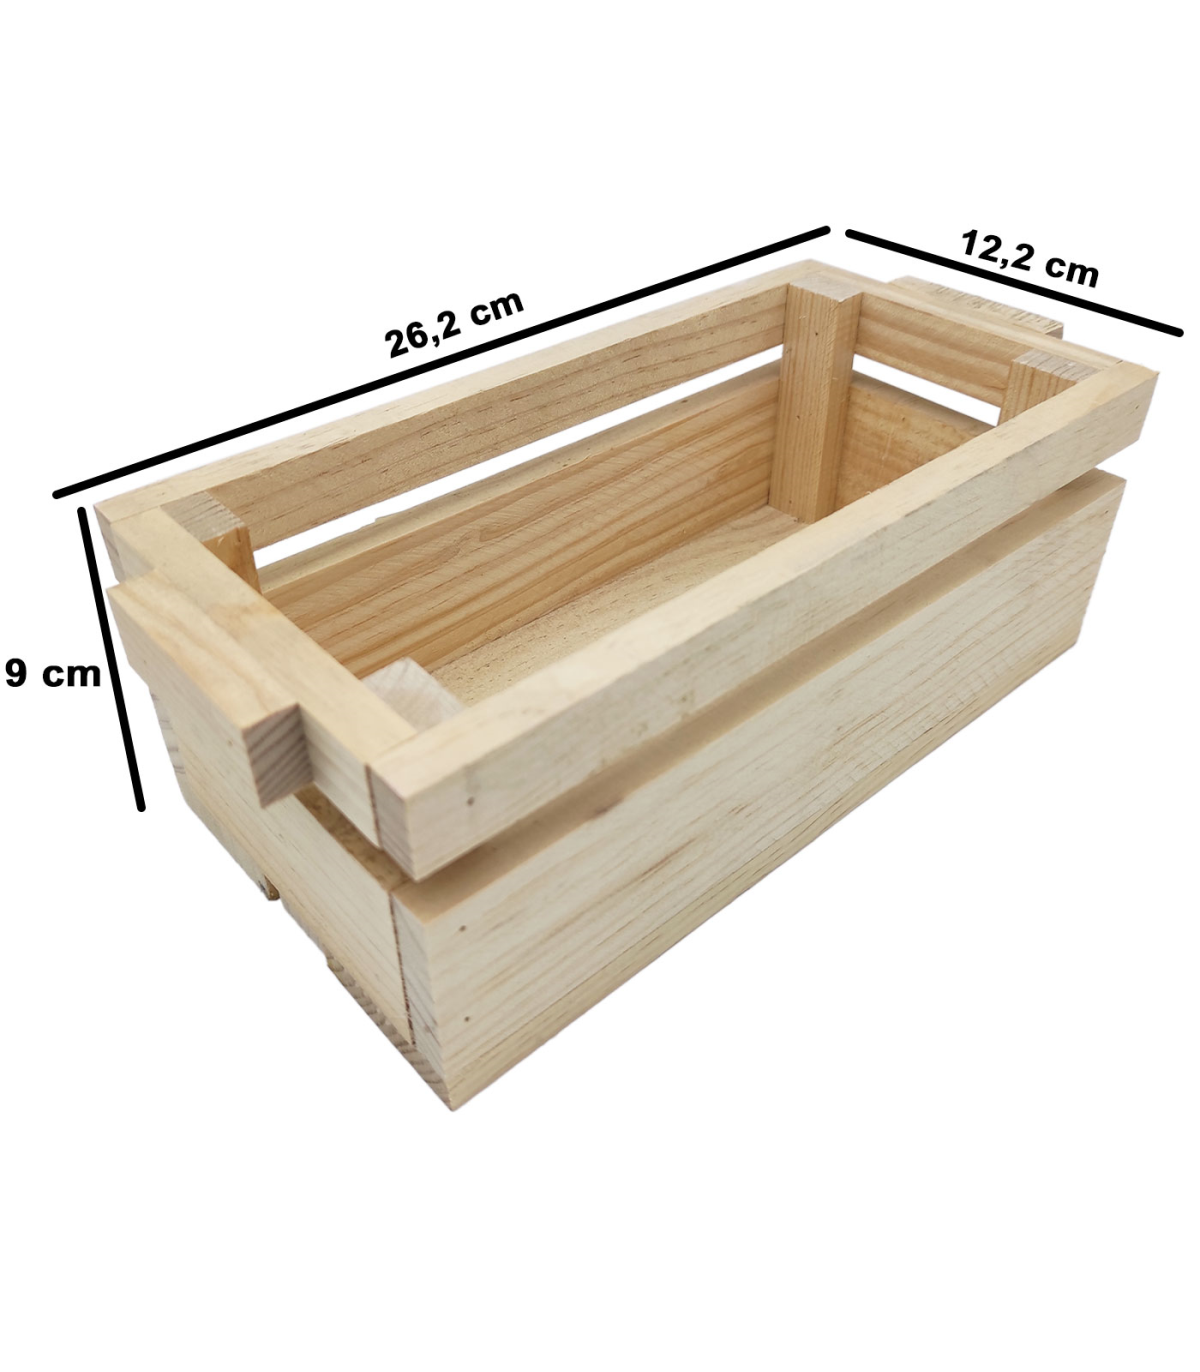 Tradineur - Set de 2 cajas de madera con asas, recipientes multiusos  rectangulares, almacenaje de herramientas, accesorios de pi